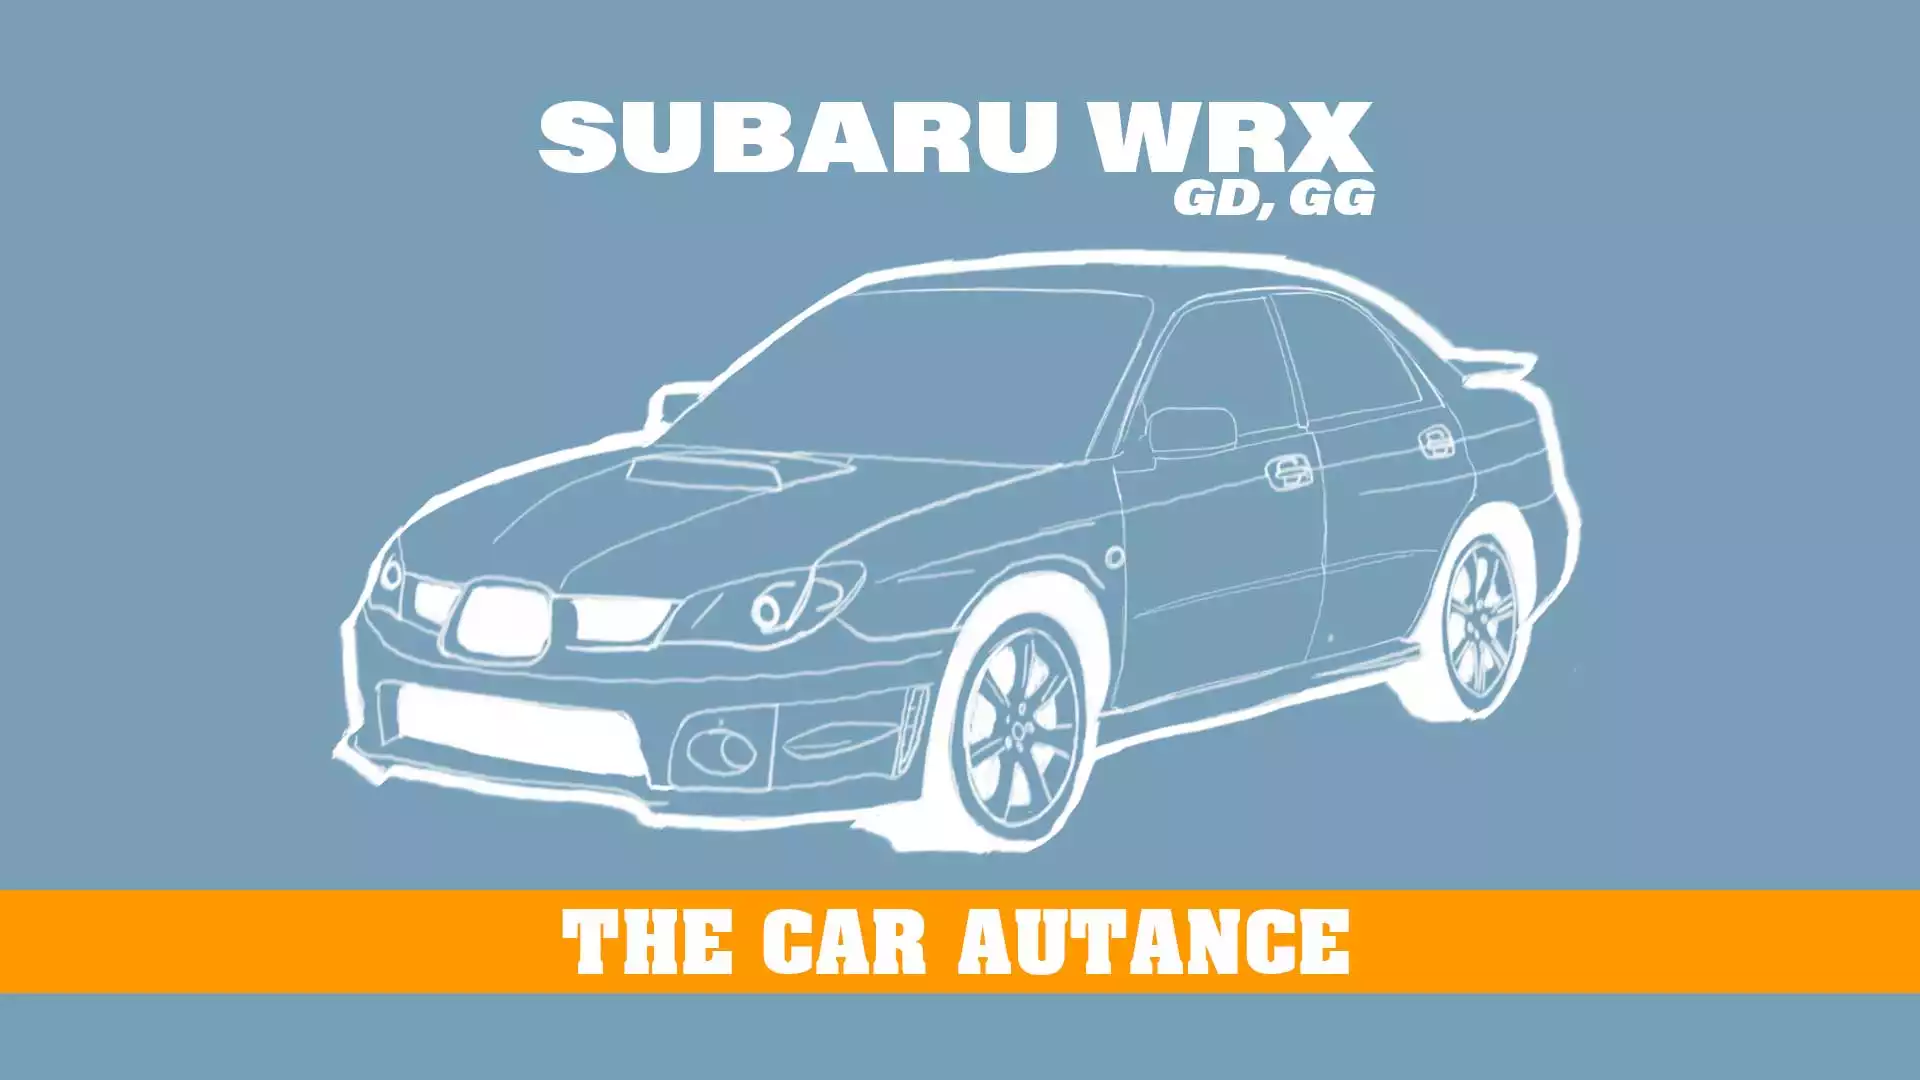 Subaru Impreza WRX: The Car Autance (GD,GG; 2002-2007)